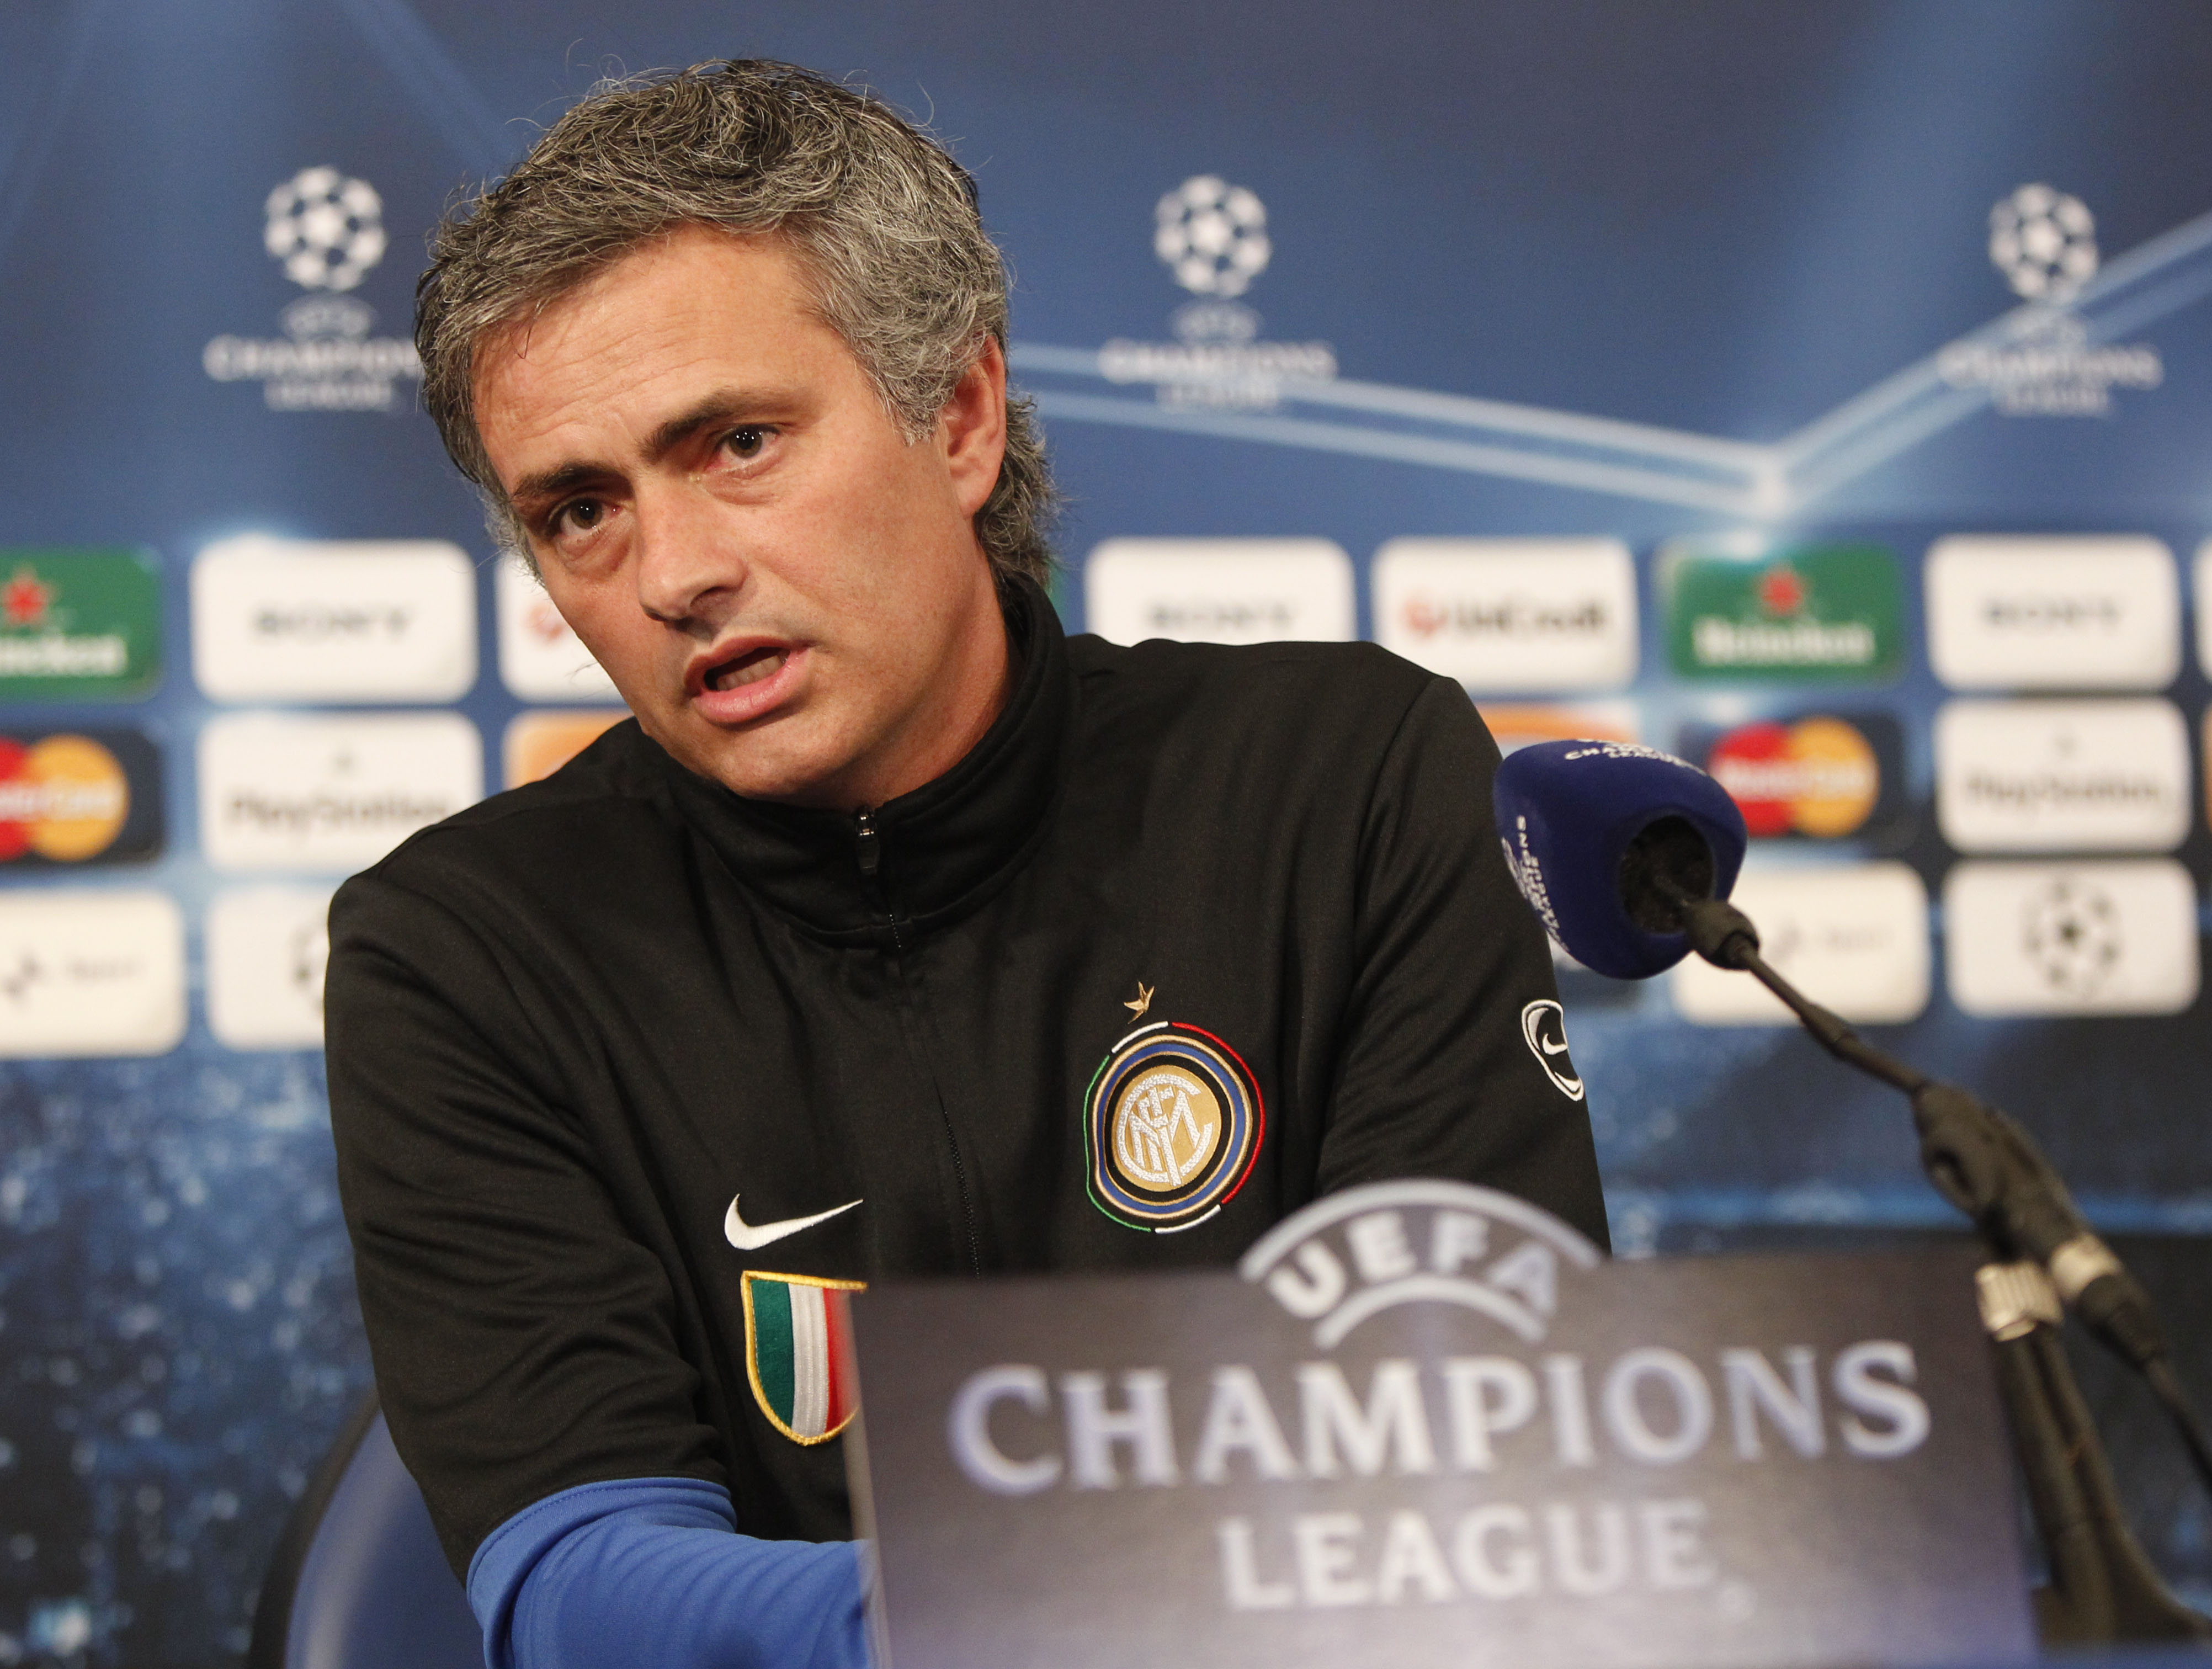 Inter, serie a, Massimo Moratti, Jose Mourinho, Champions League, Chelsea